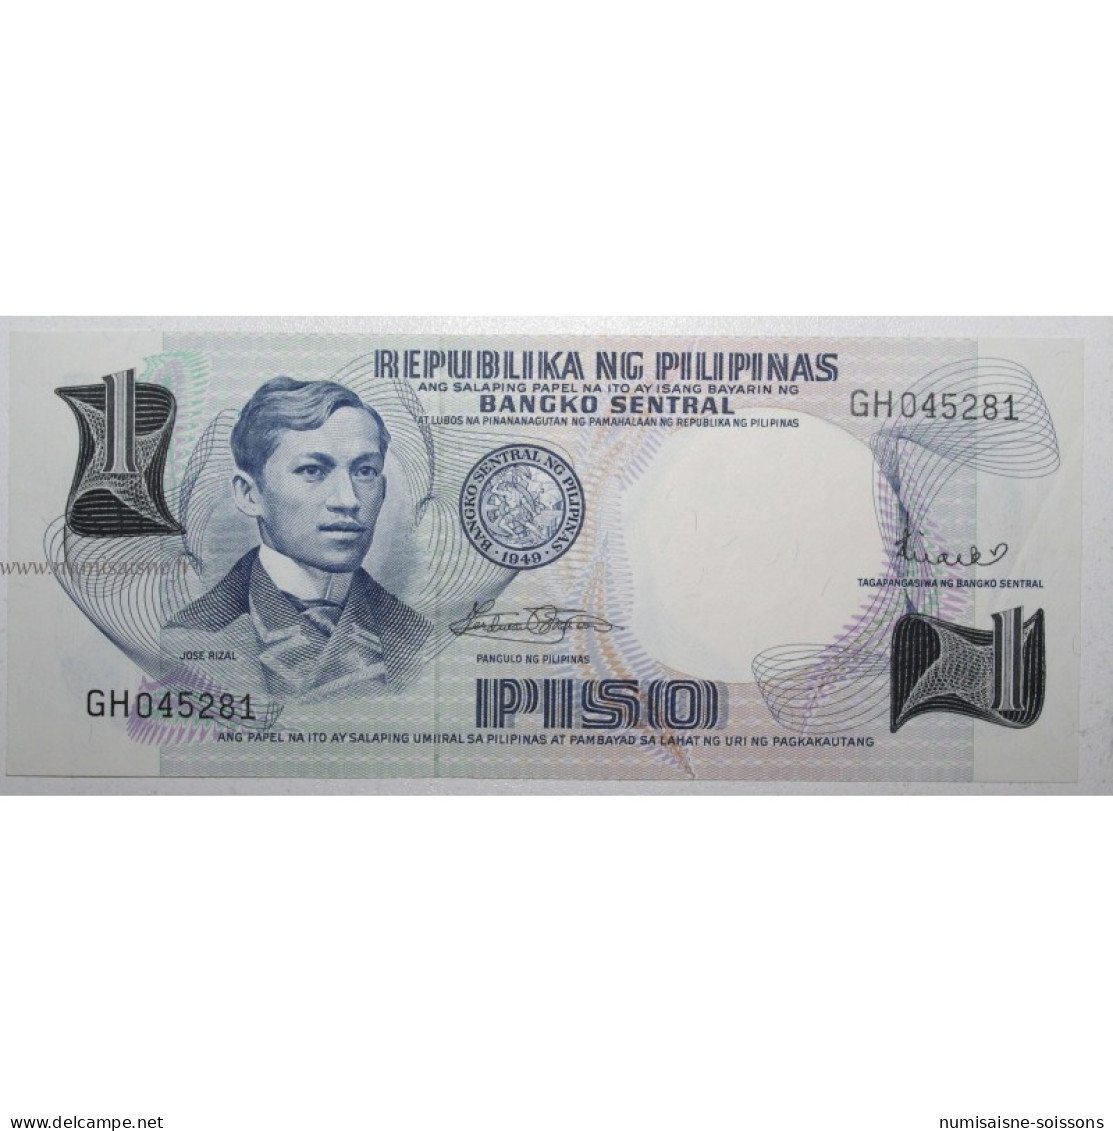 PHILIPPINES - PICK 142 B - 1 PISO 1969 - Sign. 8 - SPL - Philippinen